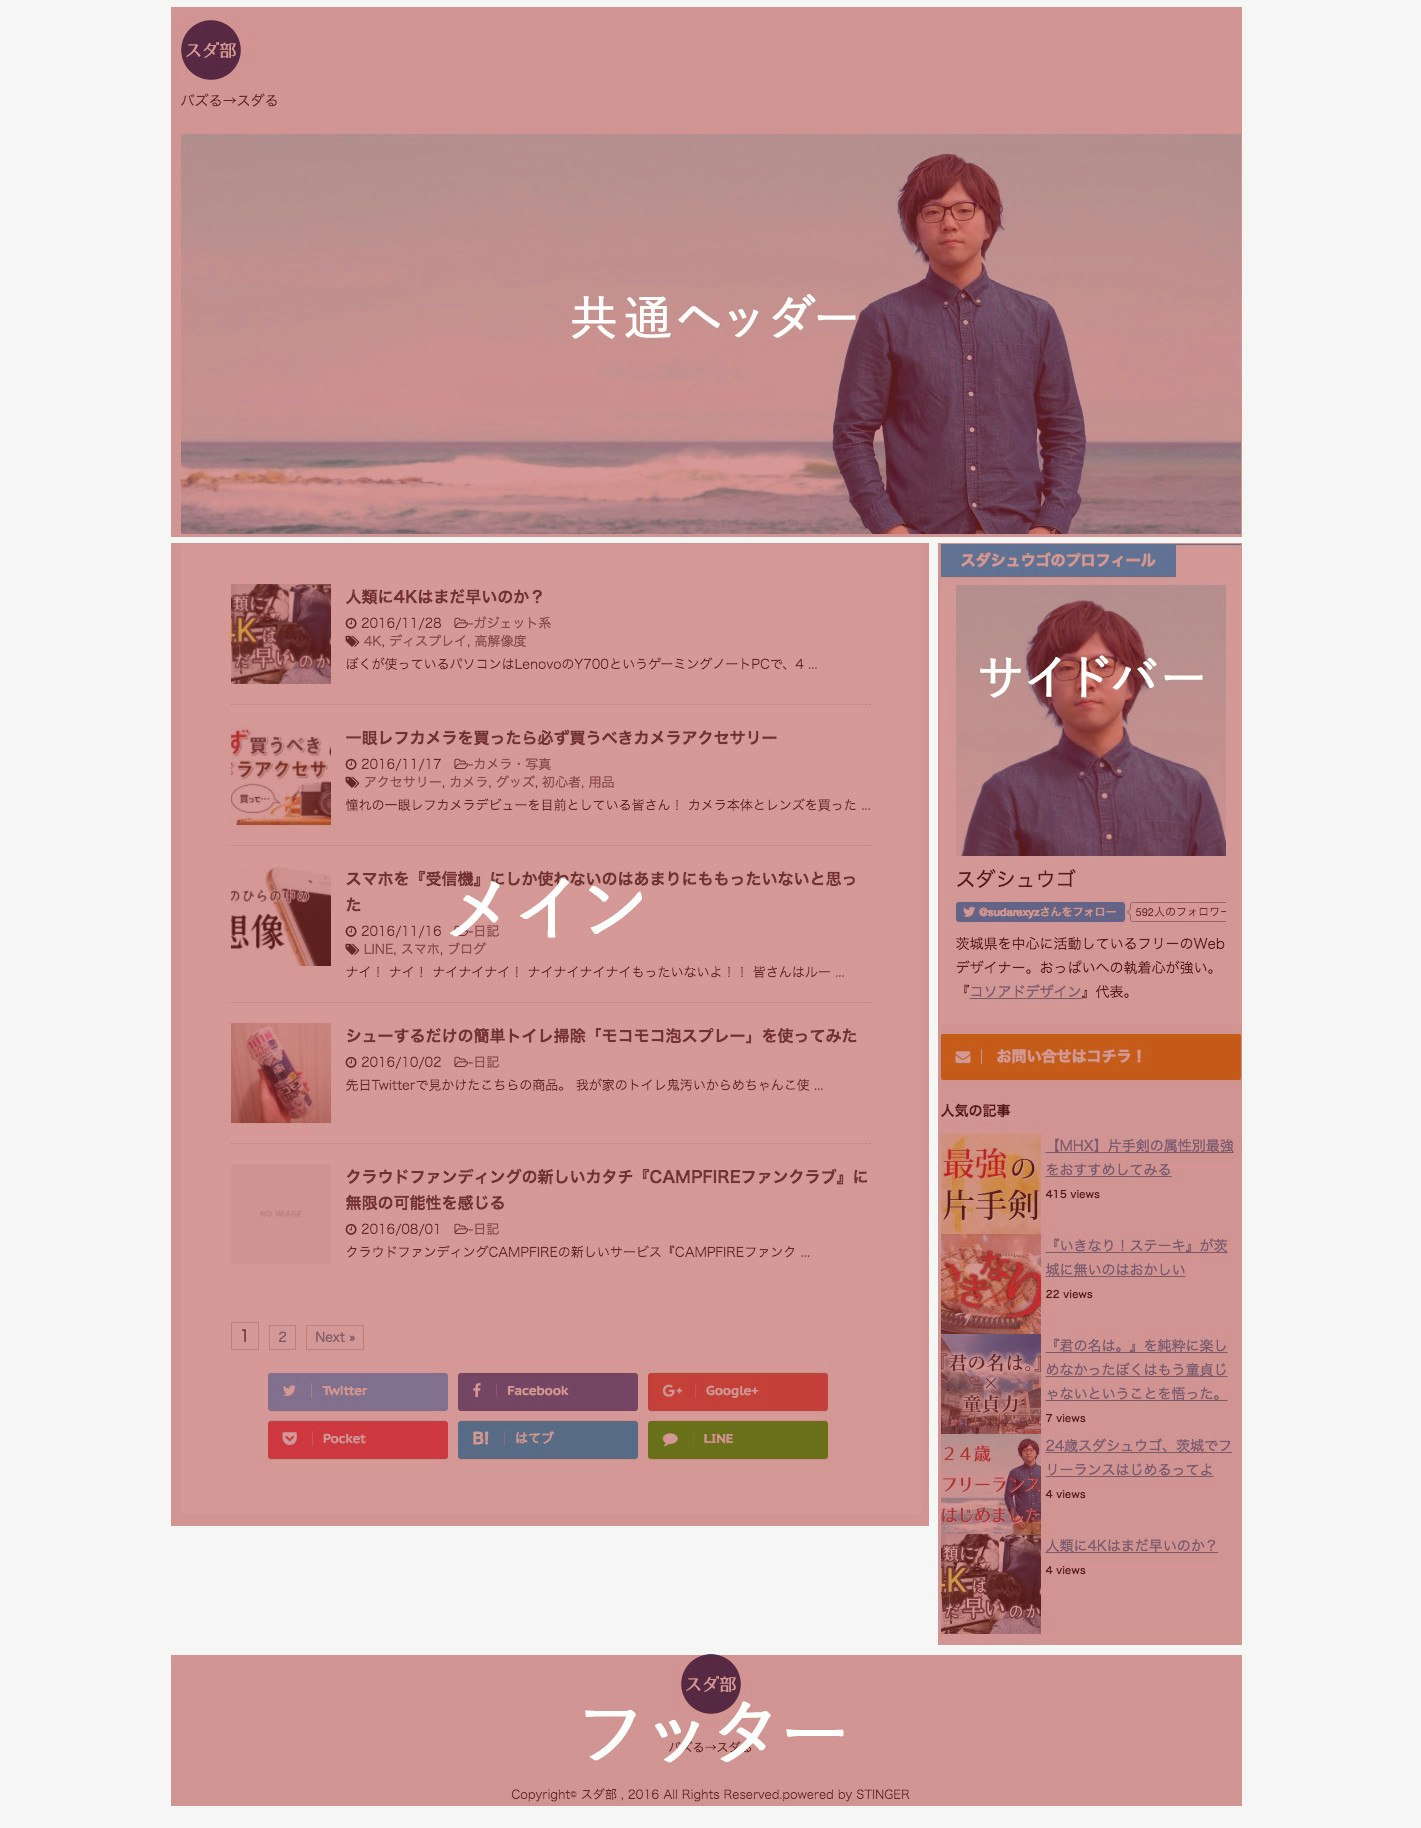 suda_layout.jpg